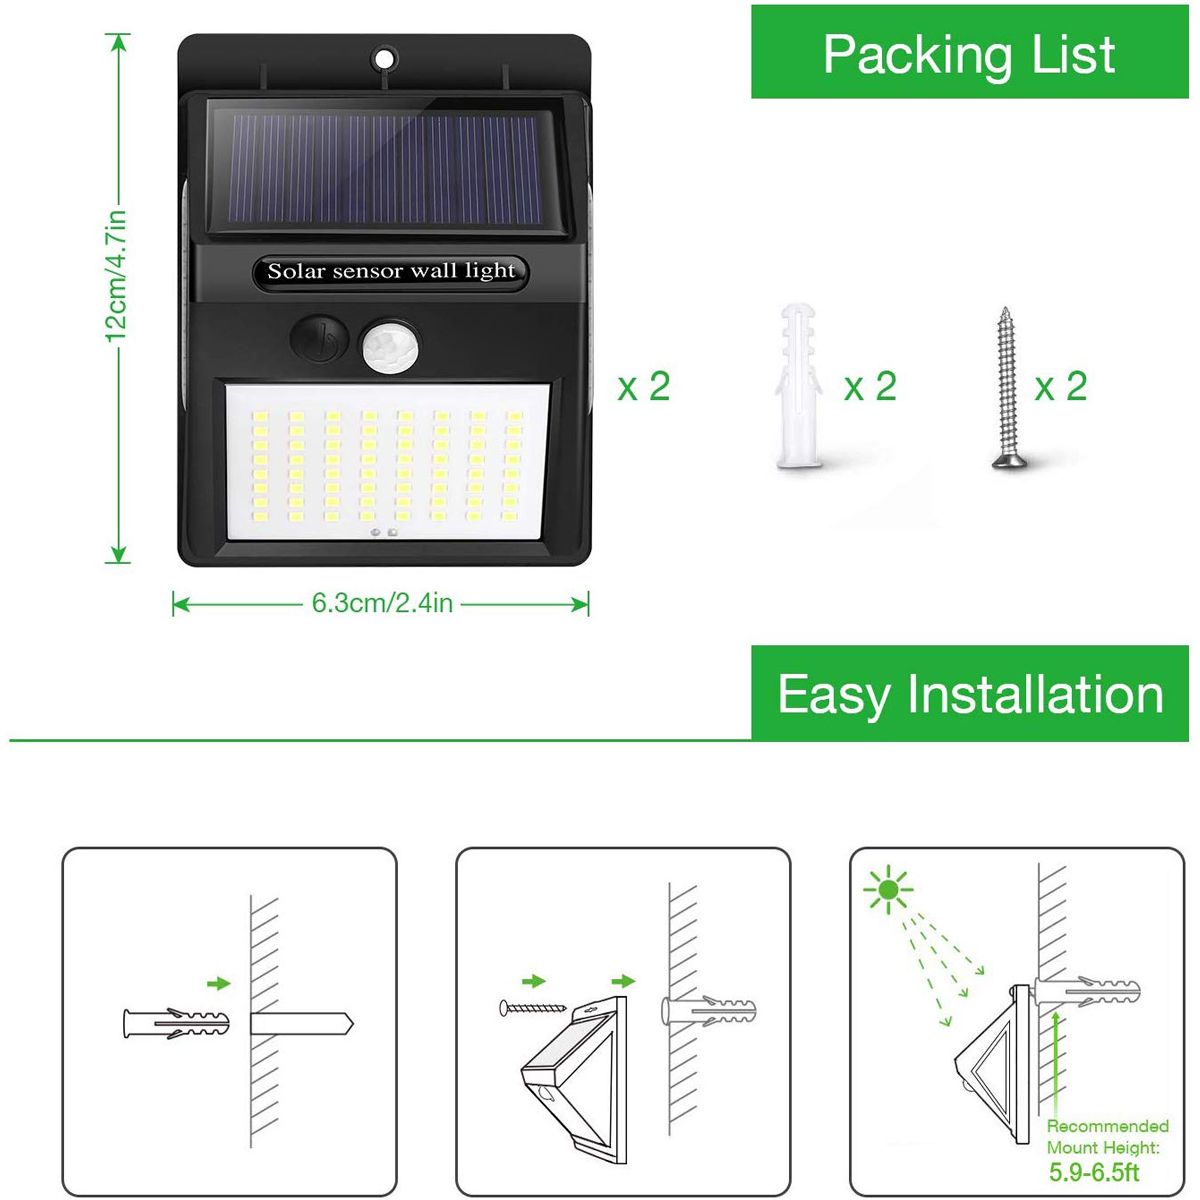 100-LED-Solar-Light-PIR-Motion-Sensor-Safety-Outdoor-Garden-Wall-Light-1584555